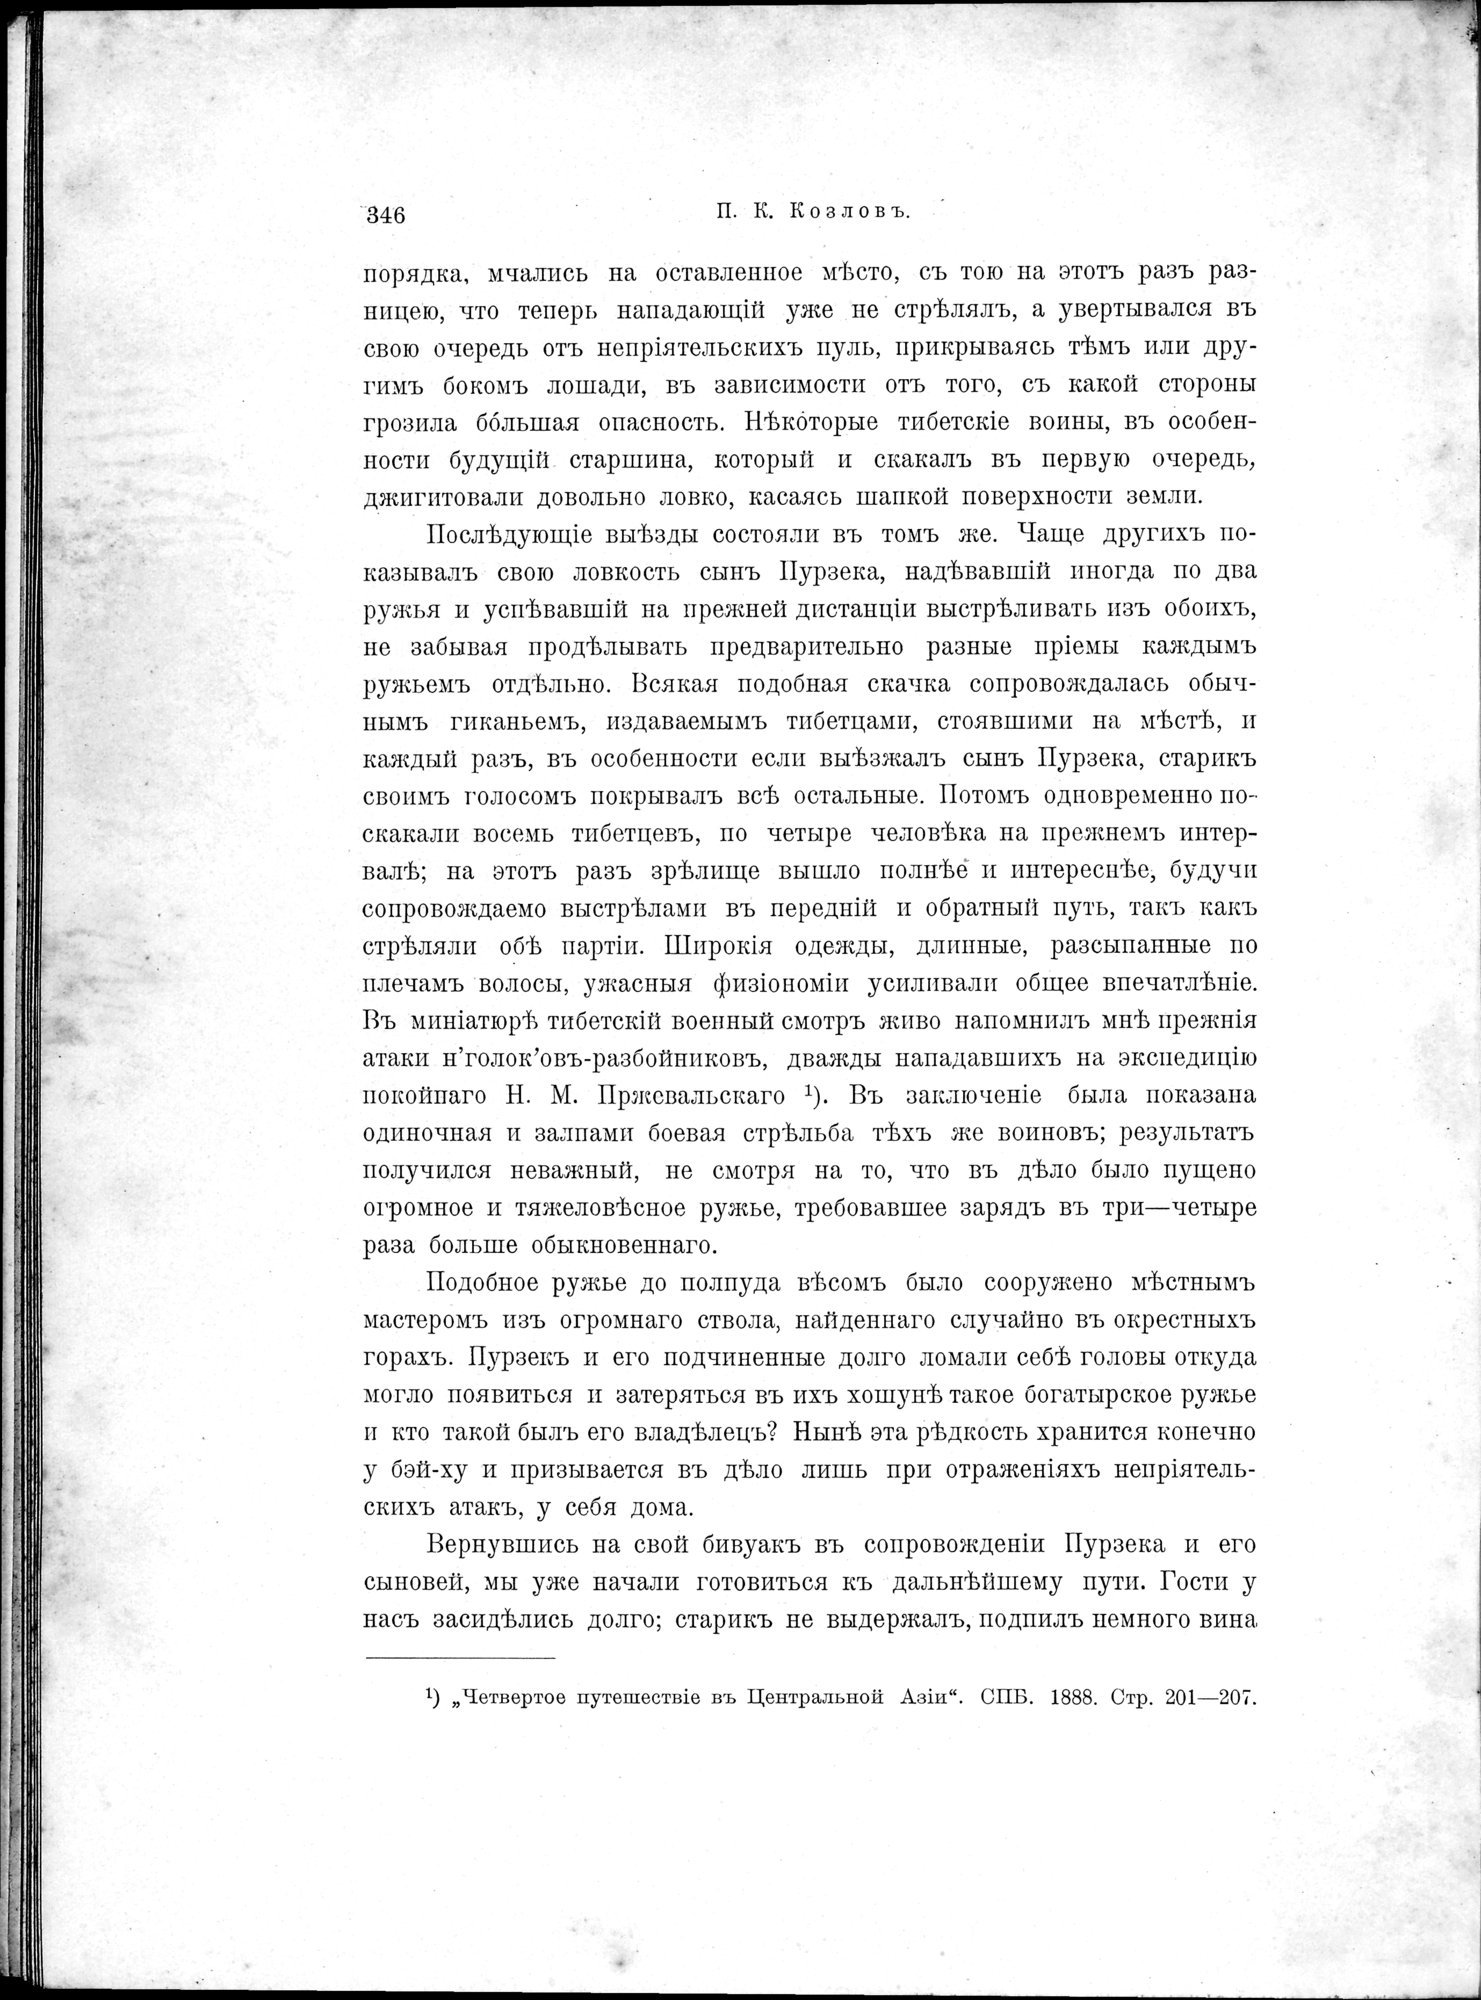 Mongoliia i Kam : vol.2 / Page 120 (Grayscale High Resolution Image)